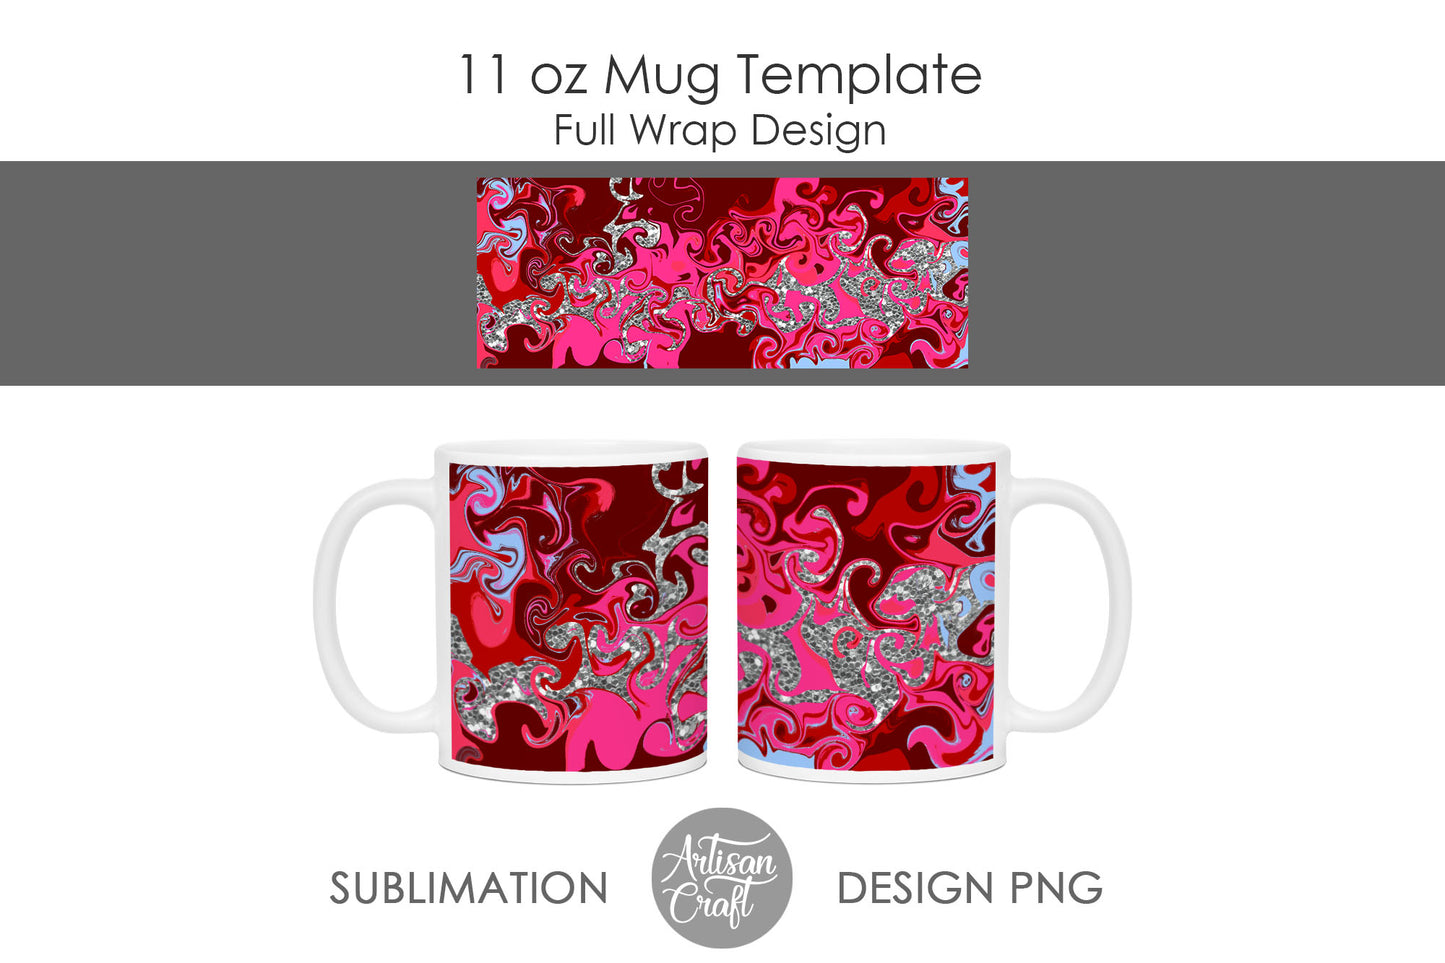 11 oz Mug sublimation template